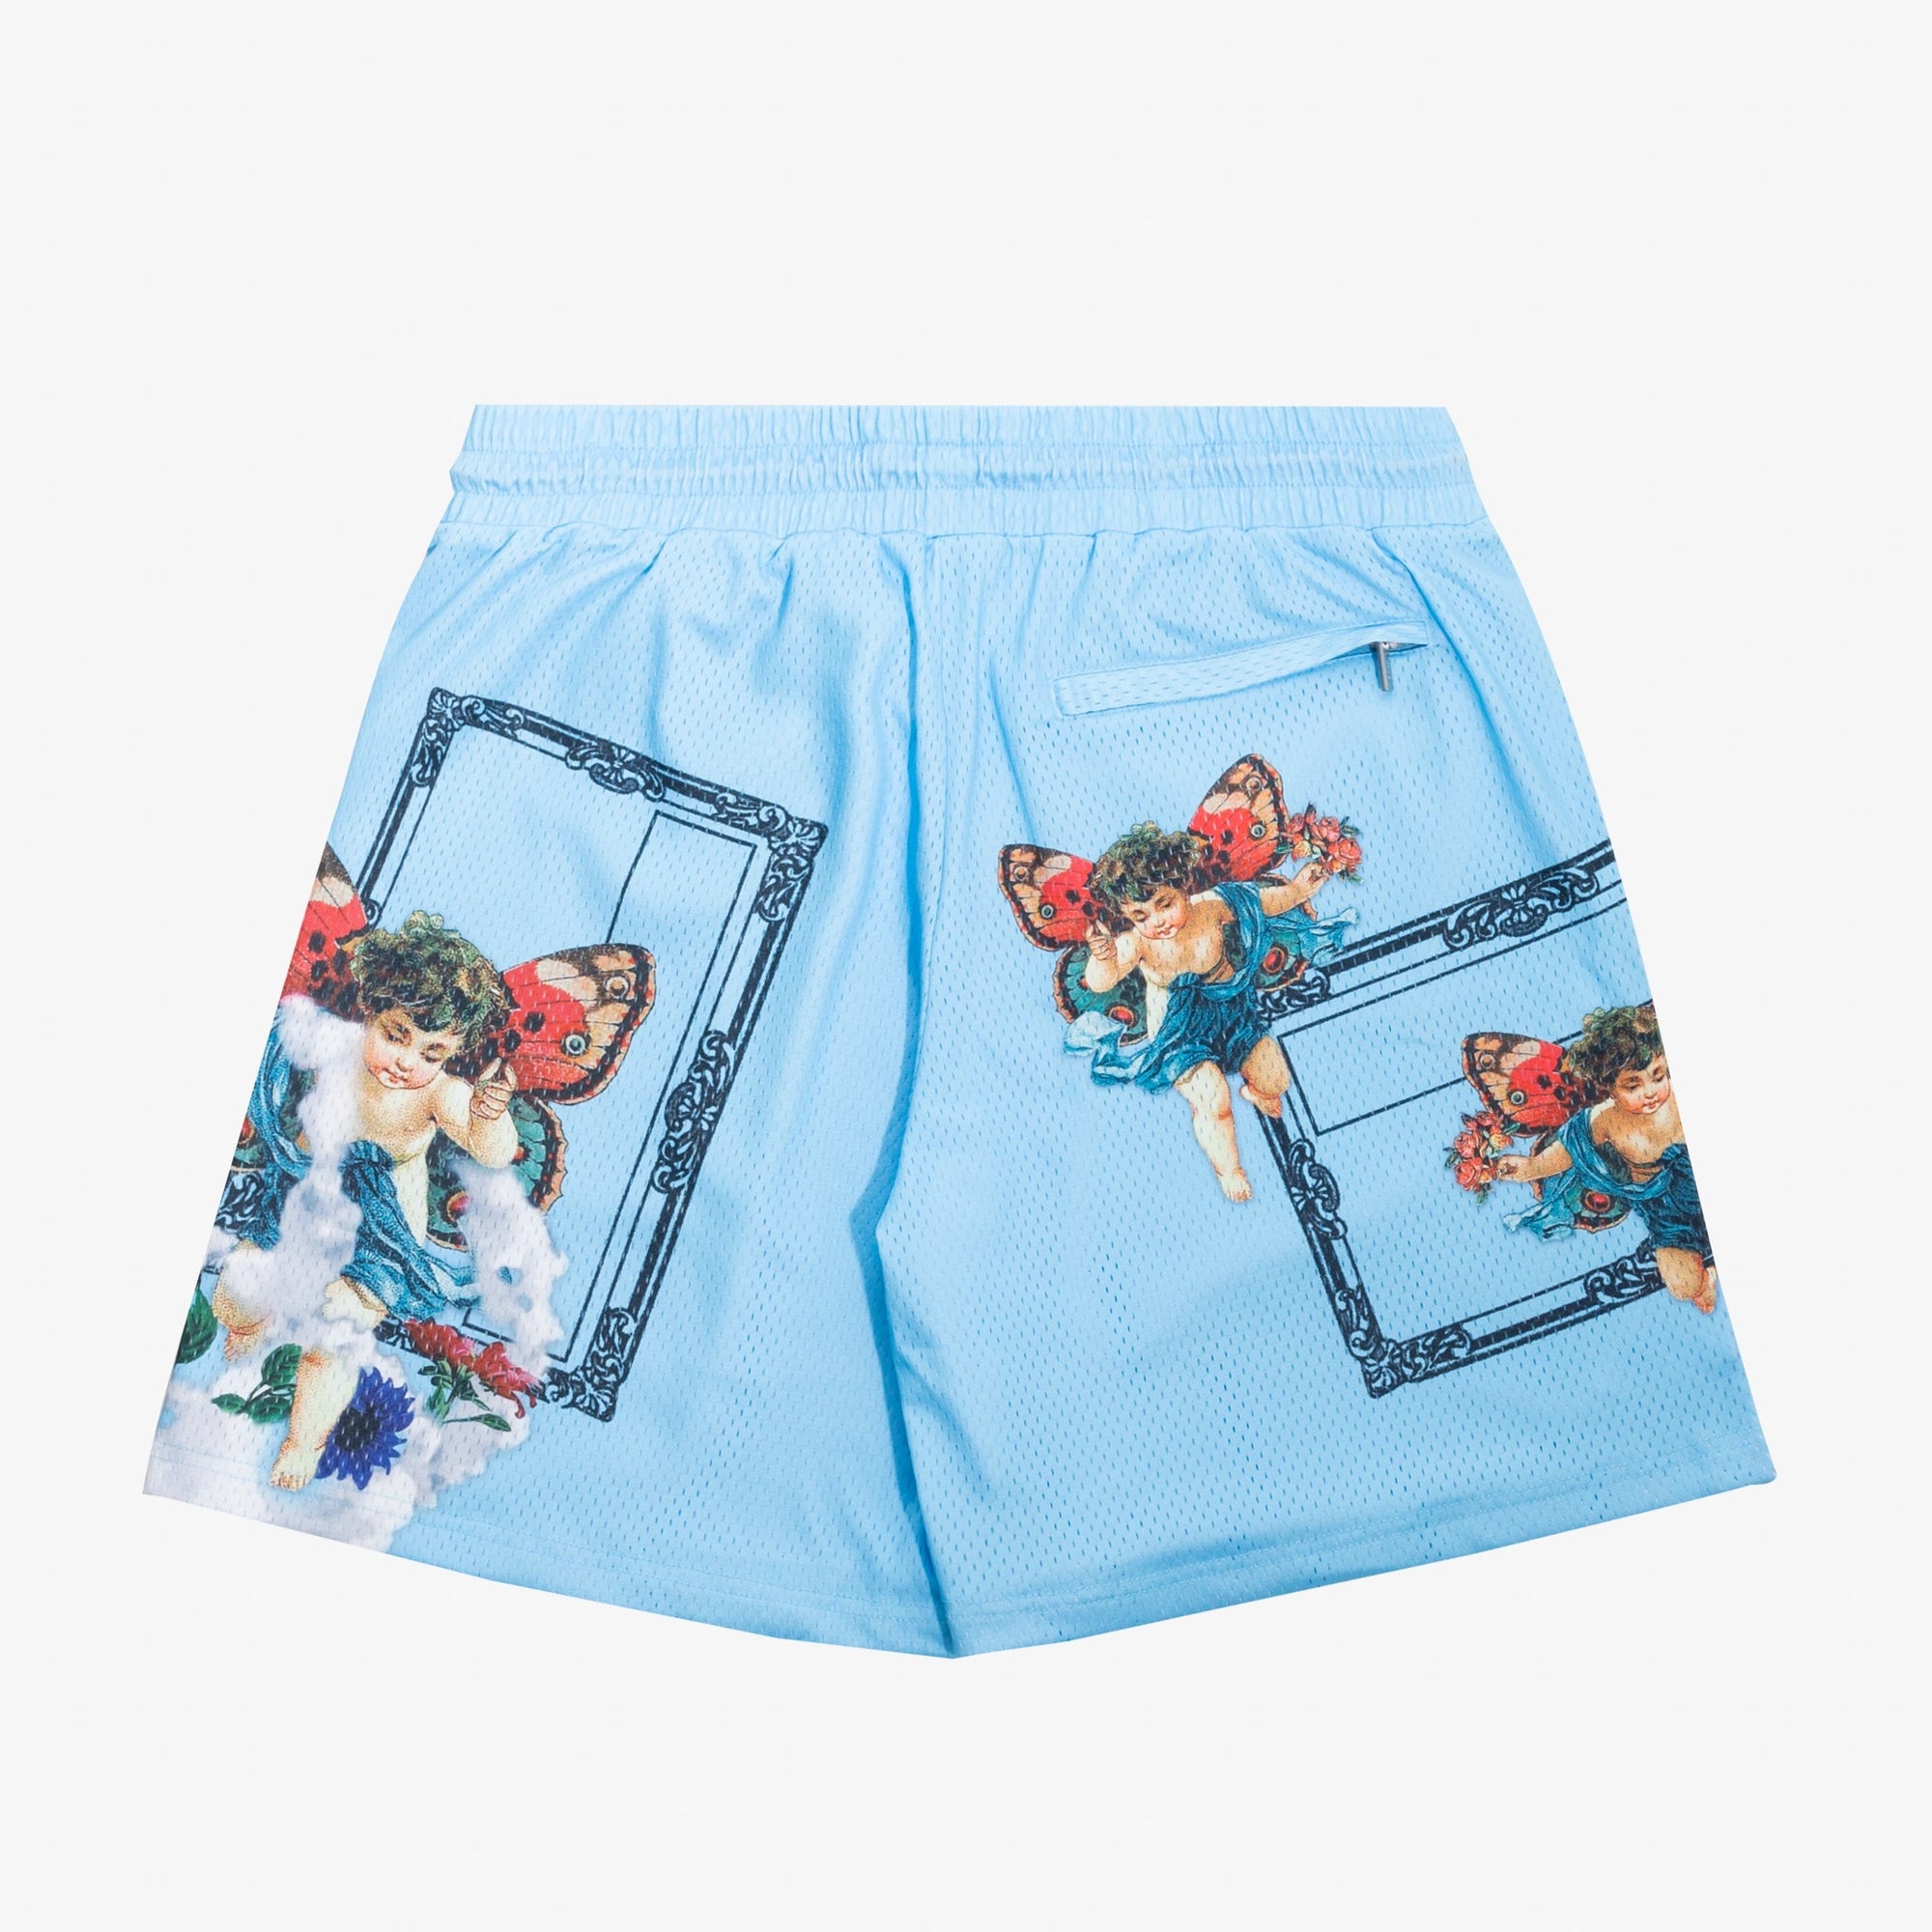 Venetian Mesh Shorts (Baby Blue)